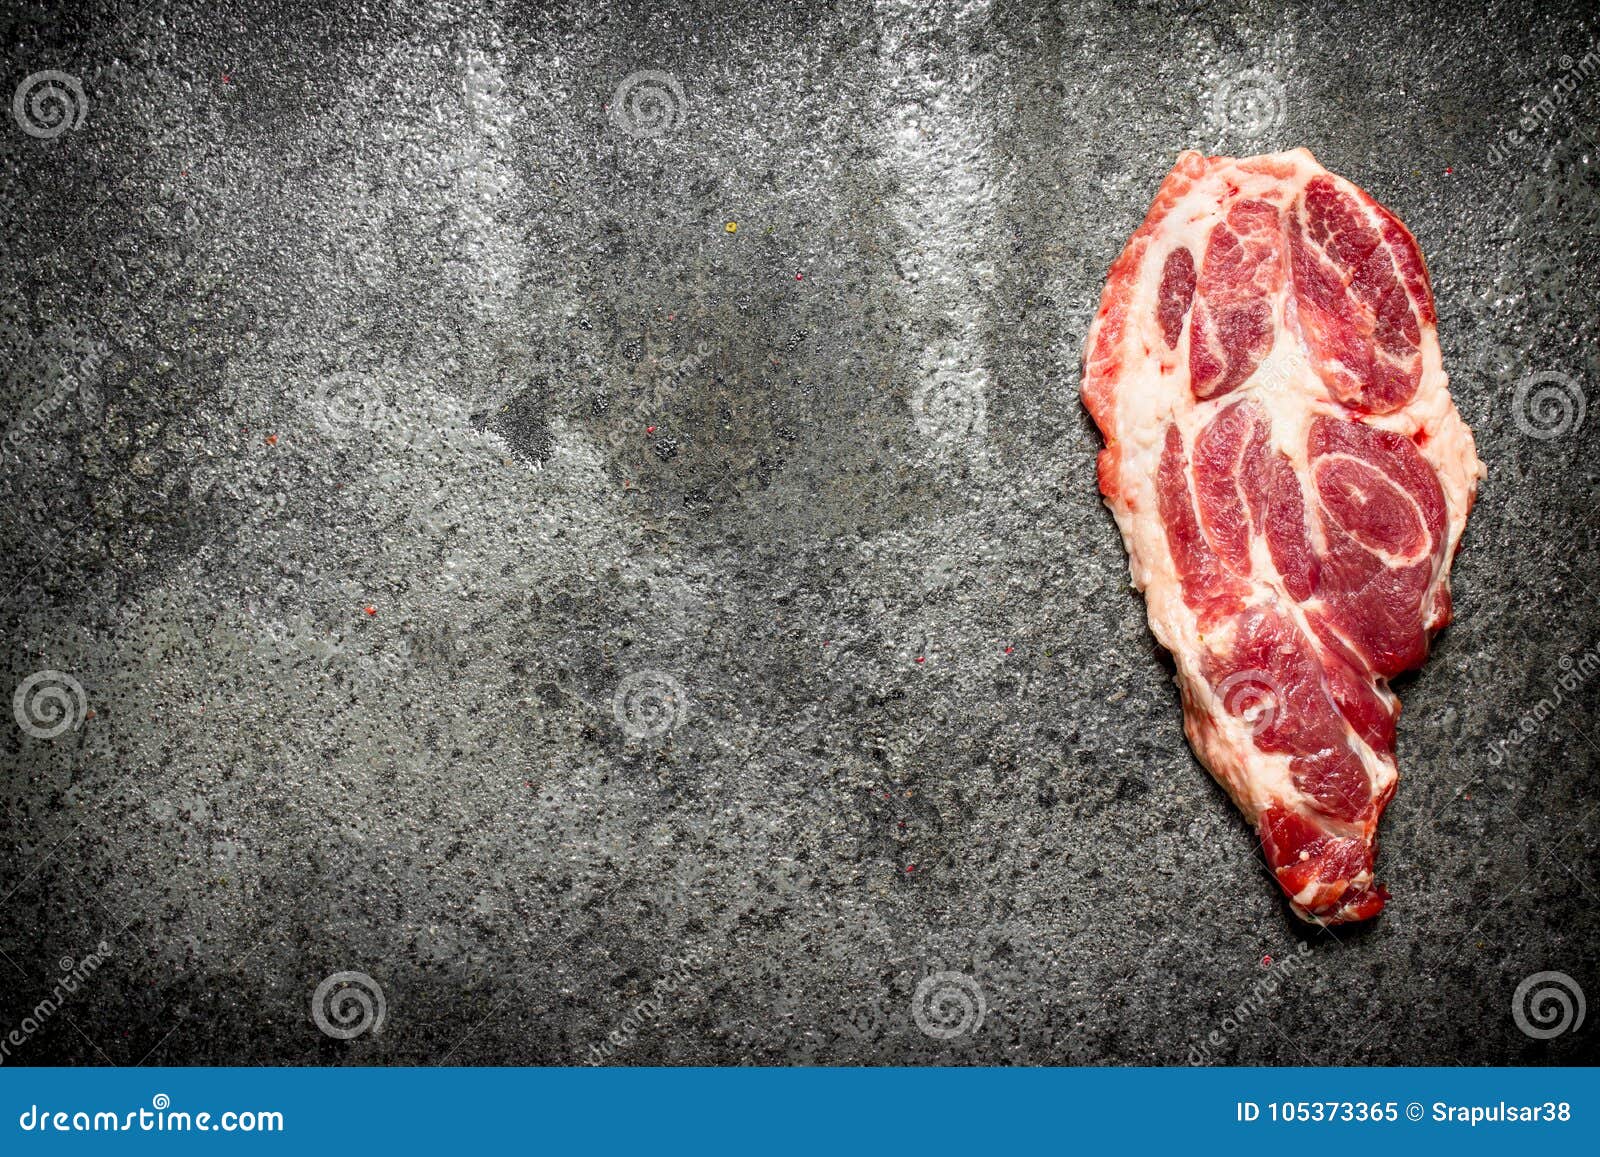 Сонник сырое мясо без крови. Мясо на сером фоне. Мясо на Светлом фоне.